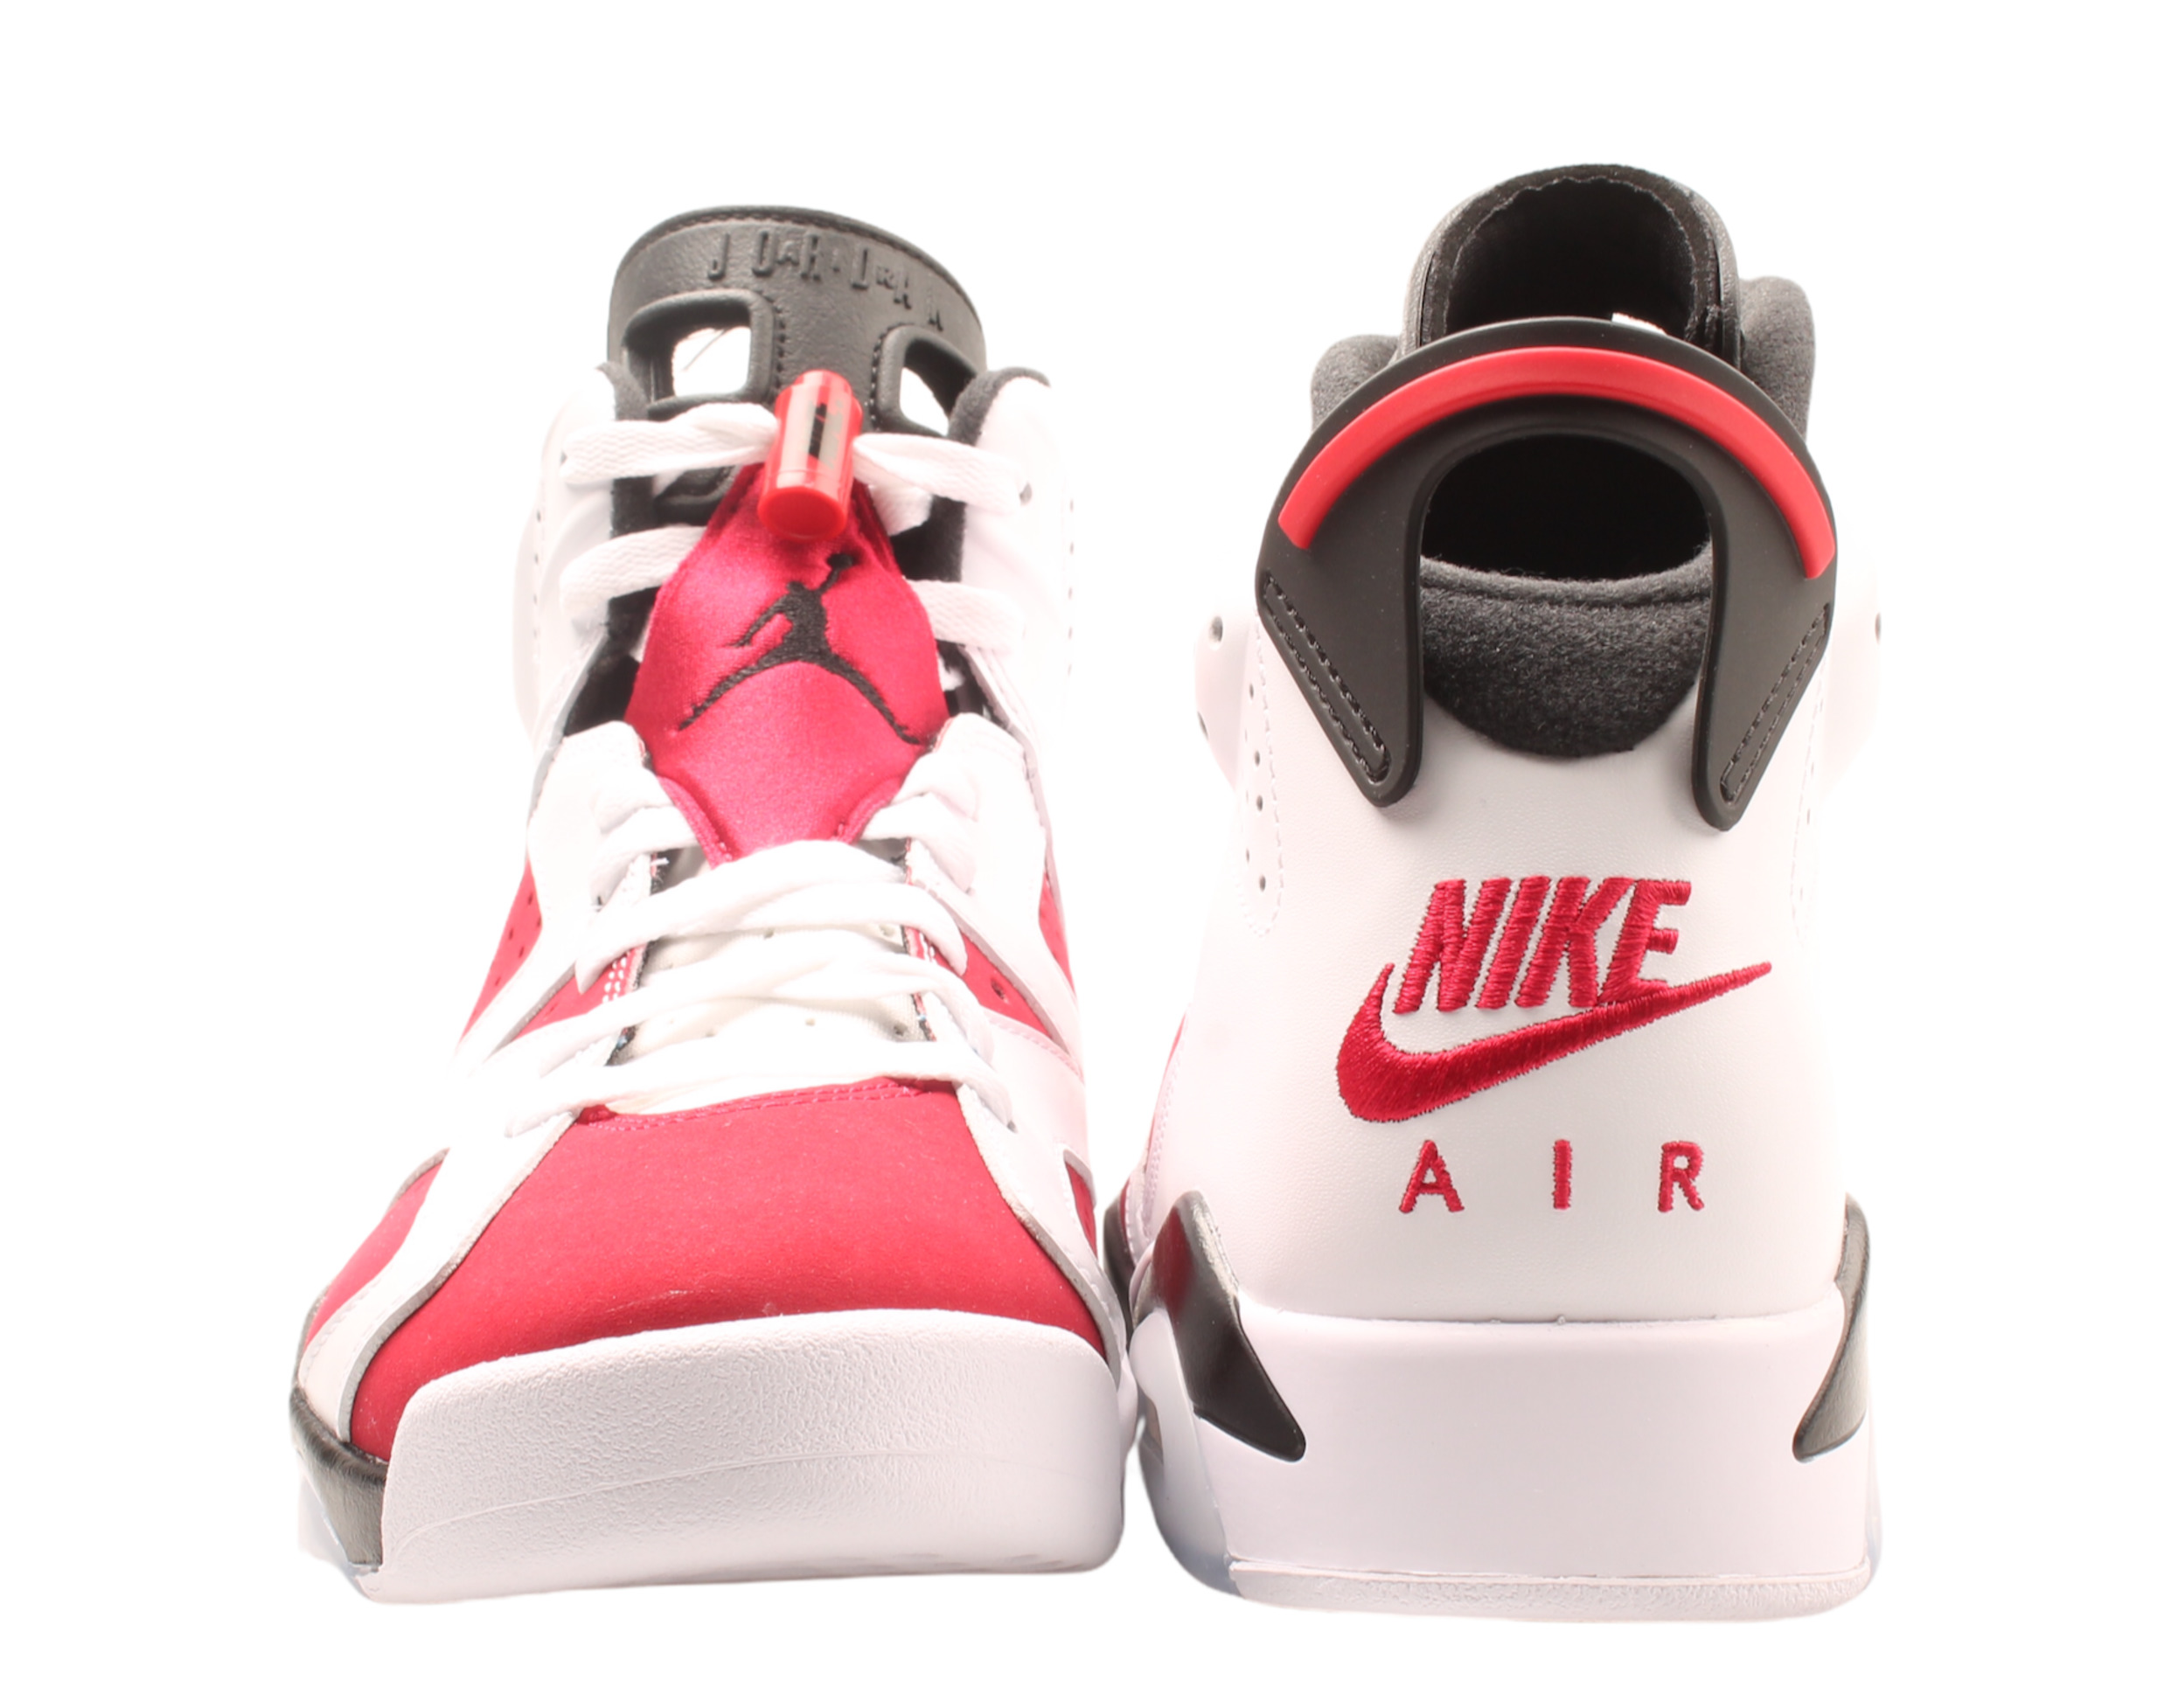 Michael Jordan Nike Air Jordan 6 Retro White/Carmine-Black Men's Basketball Shoes CT8529-106